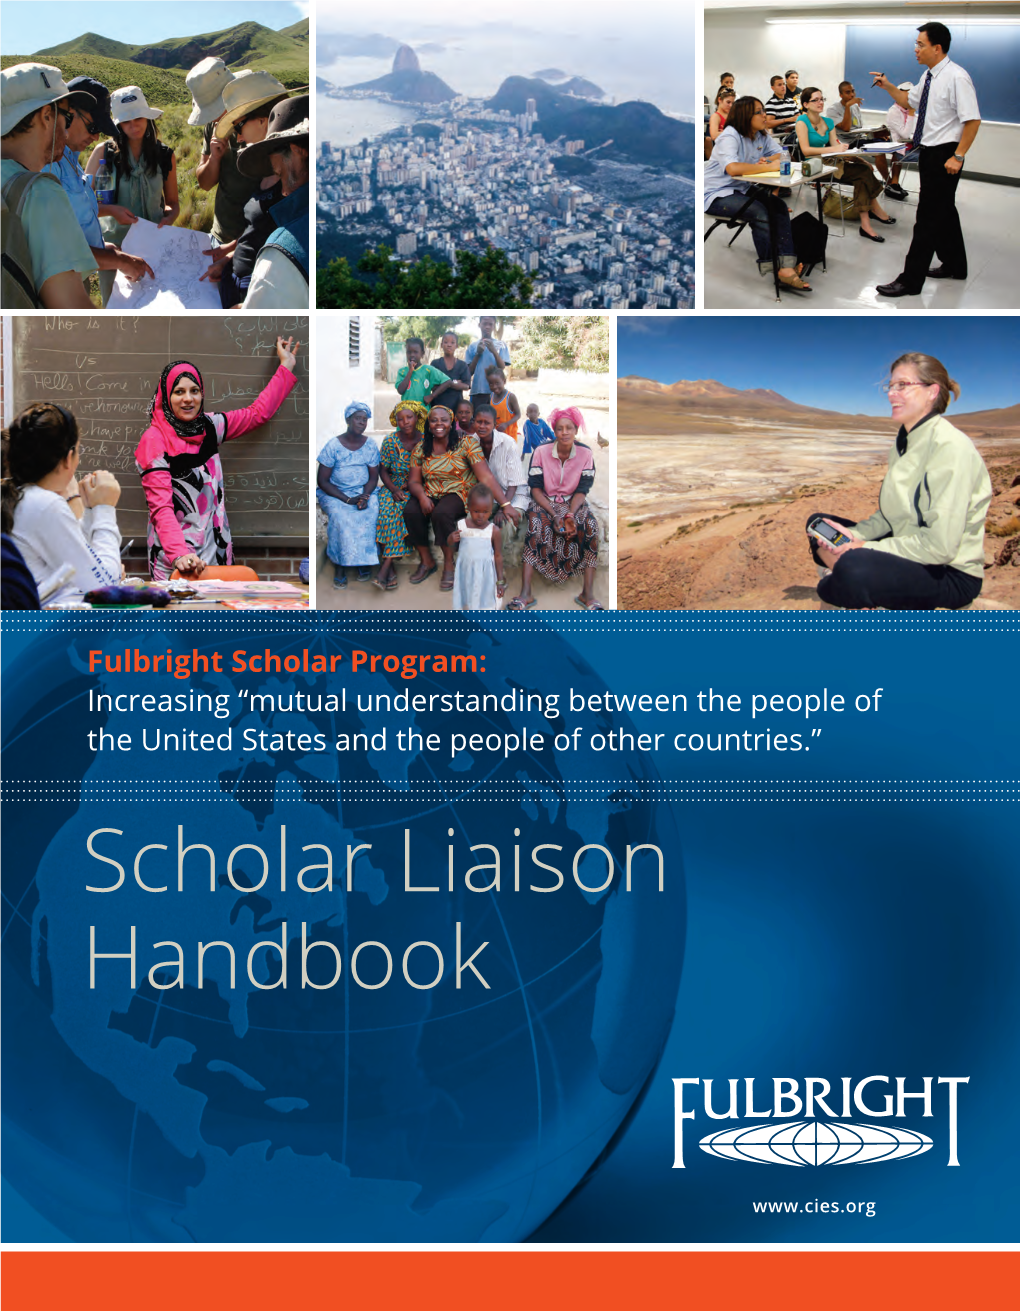 Scholar Liaison Handbook